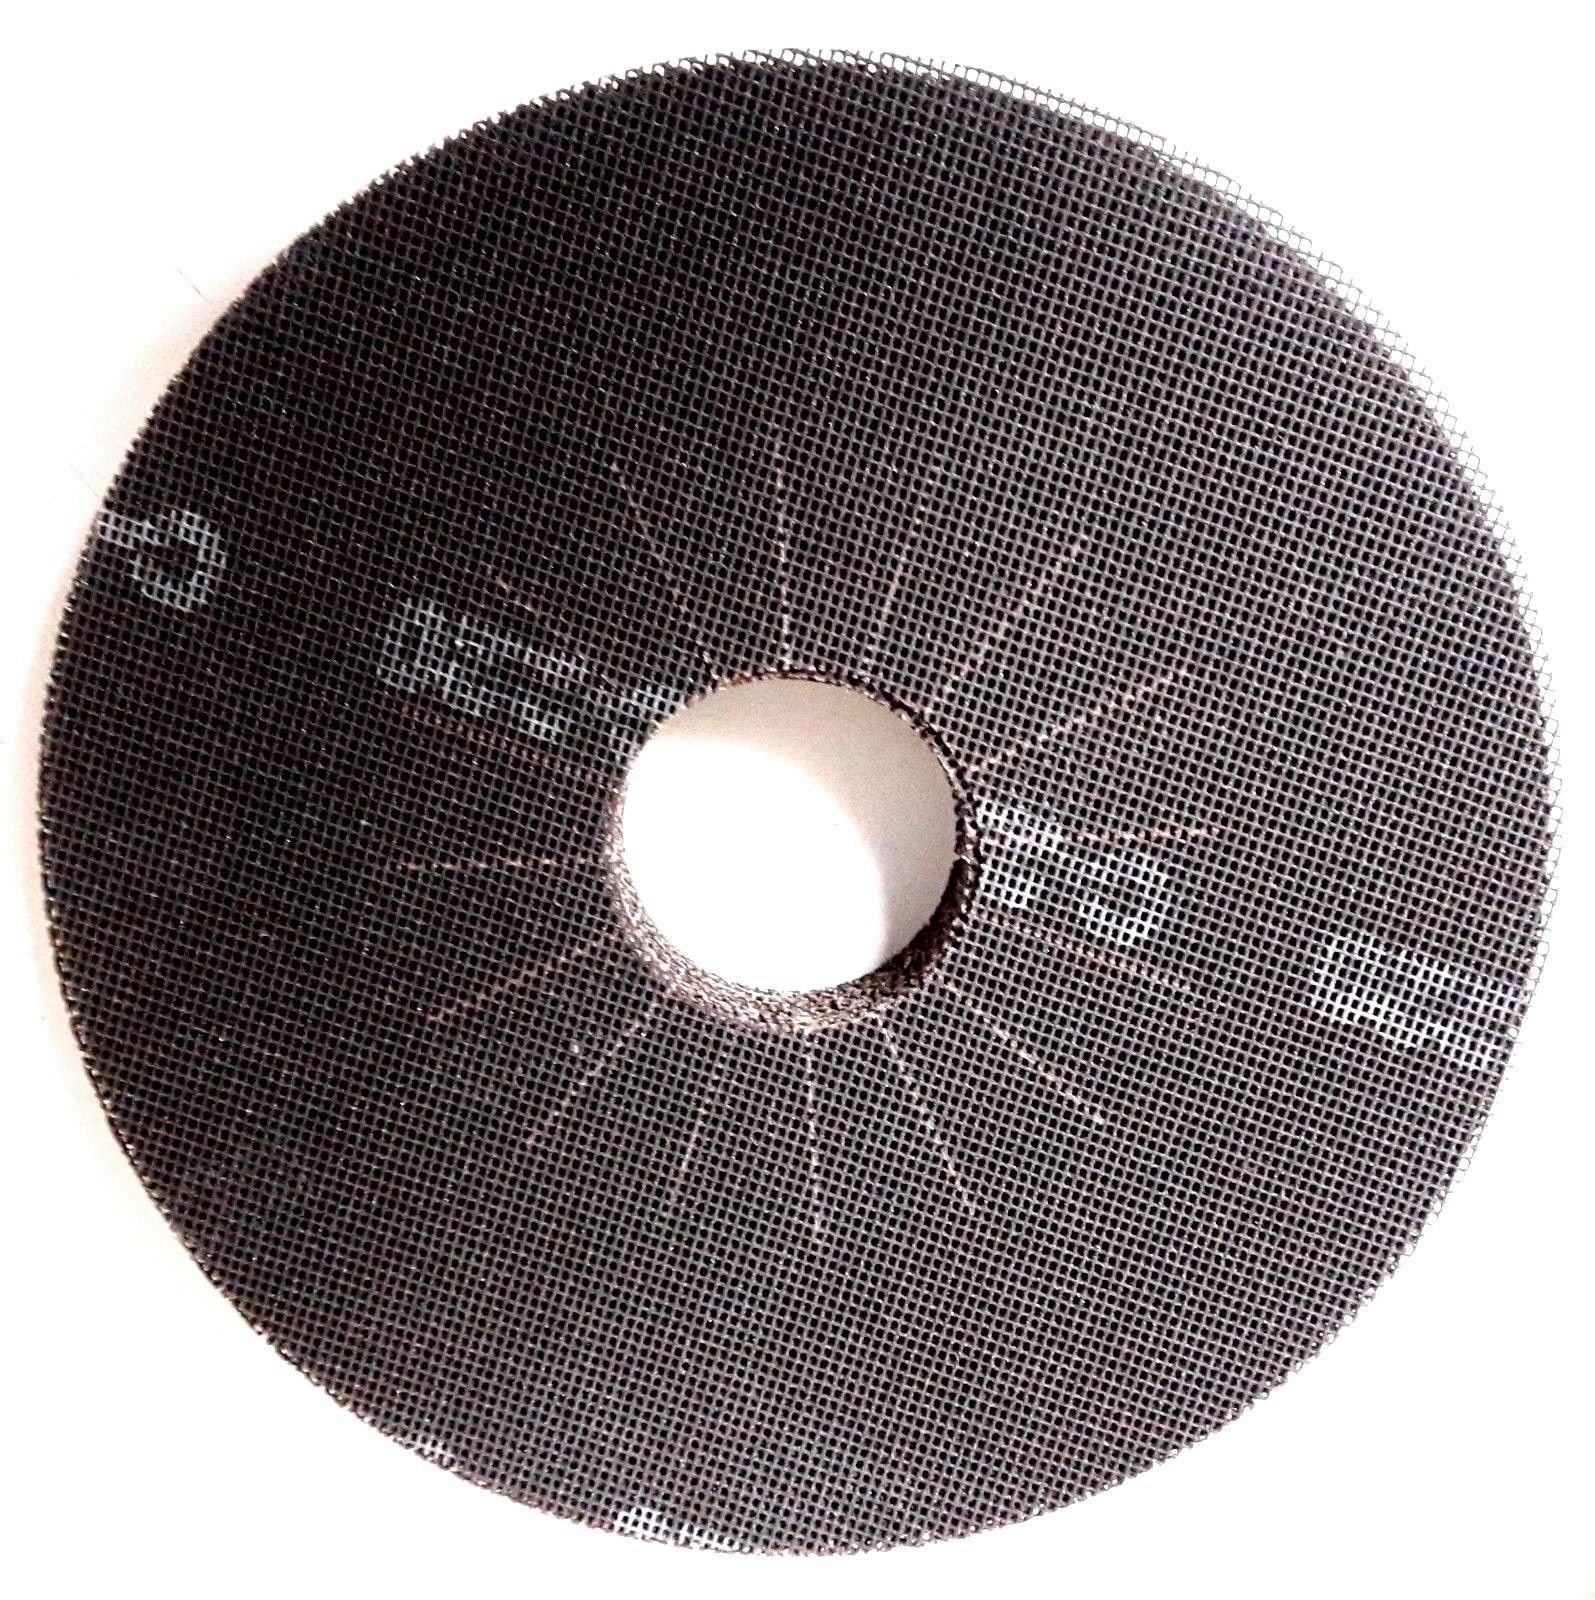 Porter Cable 76220-25 Drywall Mesh Discs 220g 25PK USA